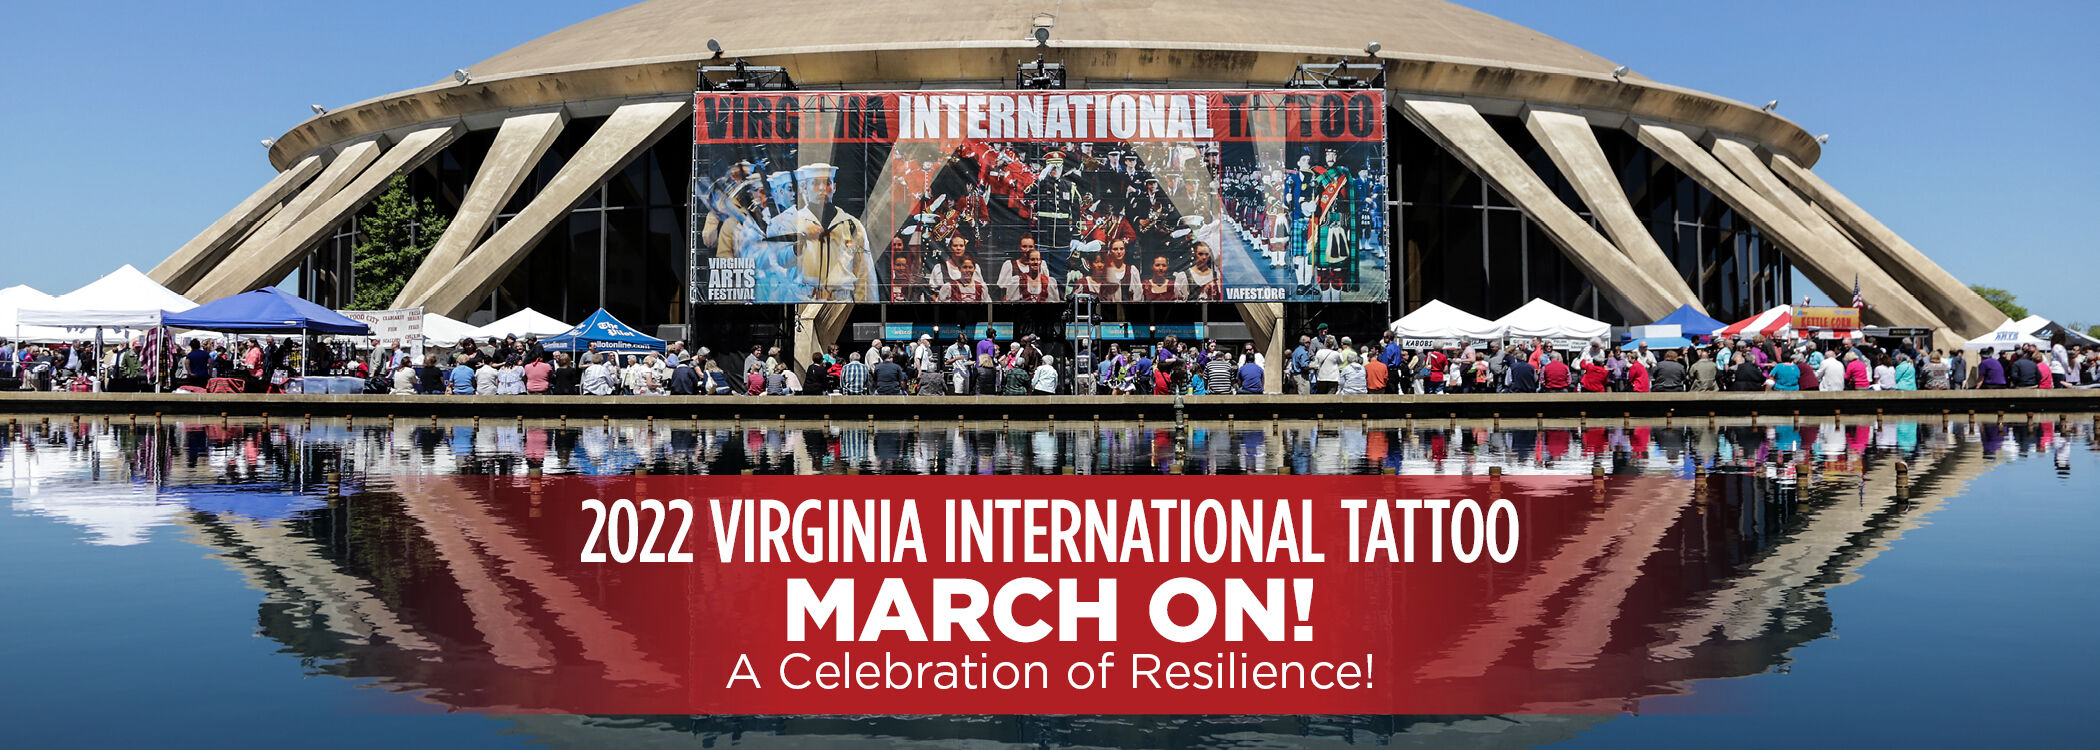 Virginia Beach VA Tattoo Convention Events  Eventbrite  Page 2